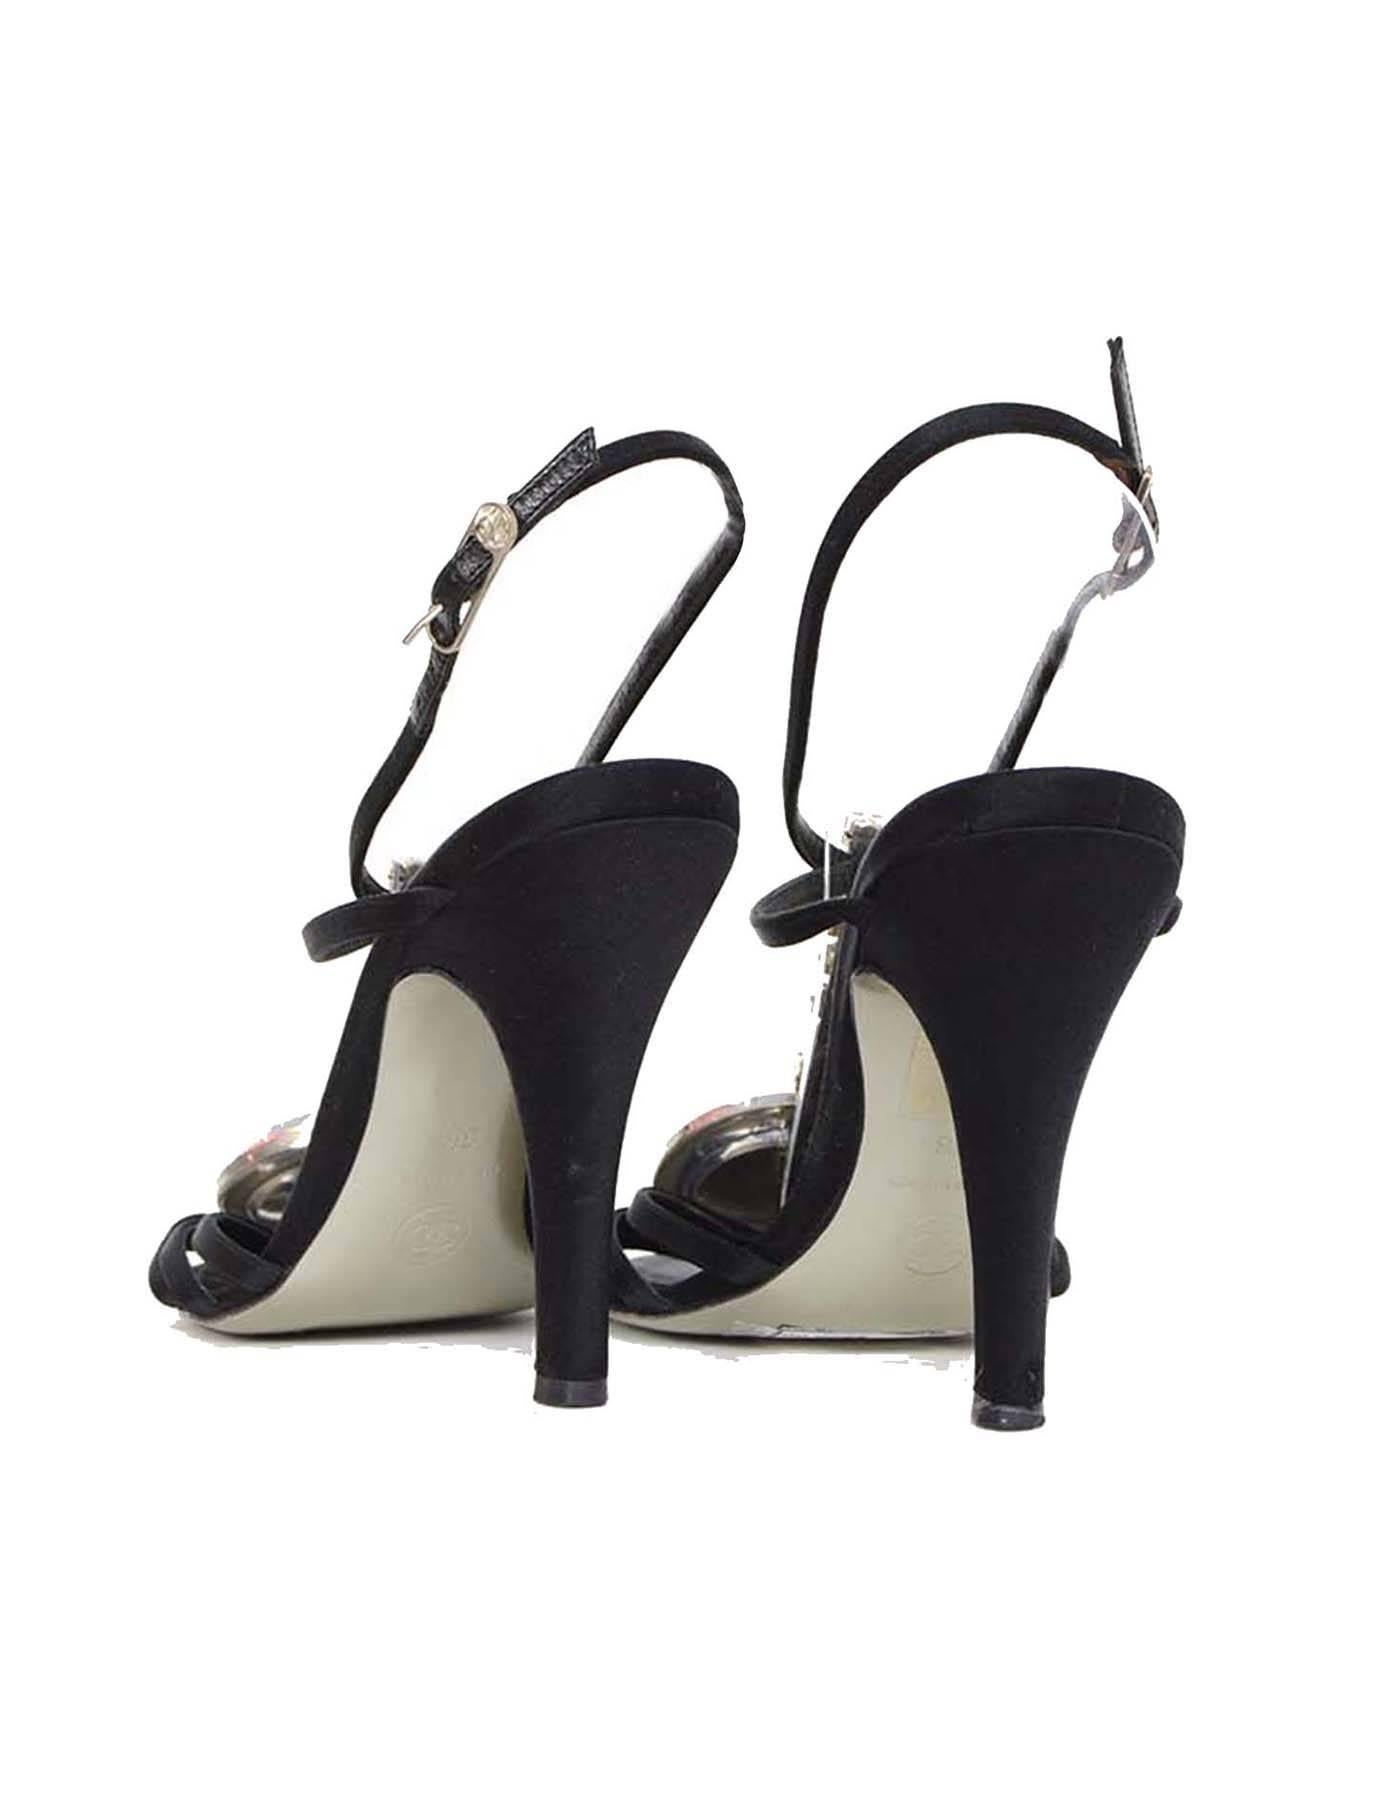 Women's Chanel Black Satin & Crystal Evening Sandals sz 38